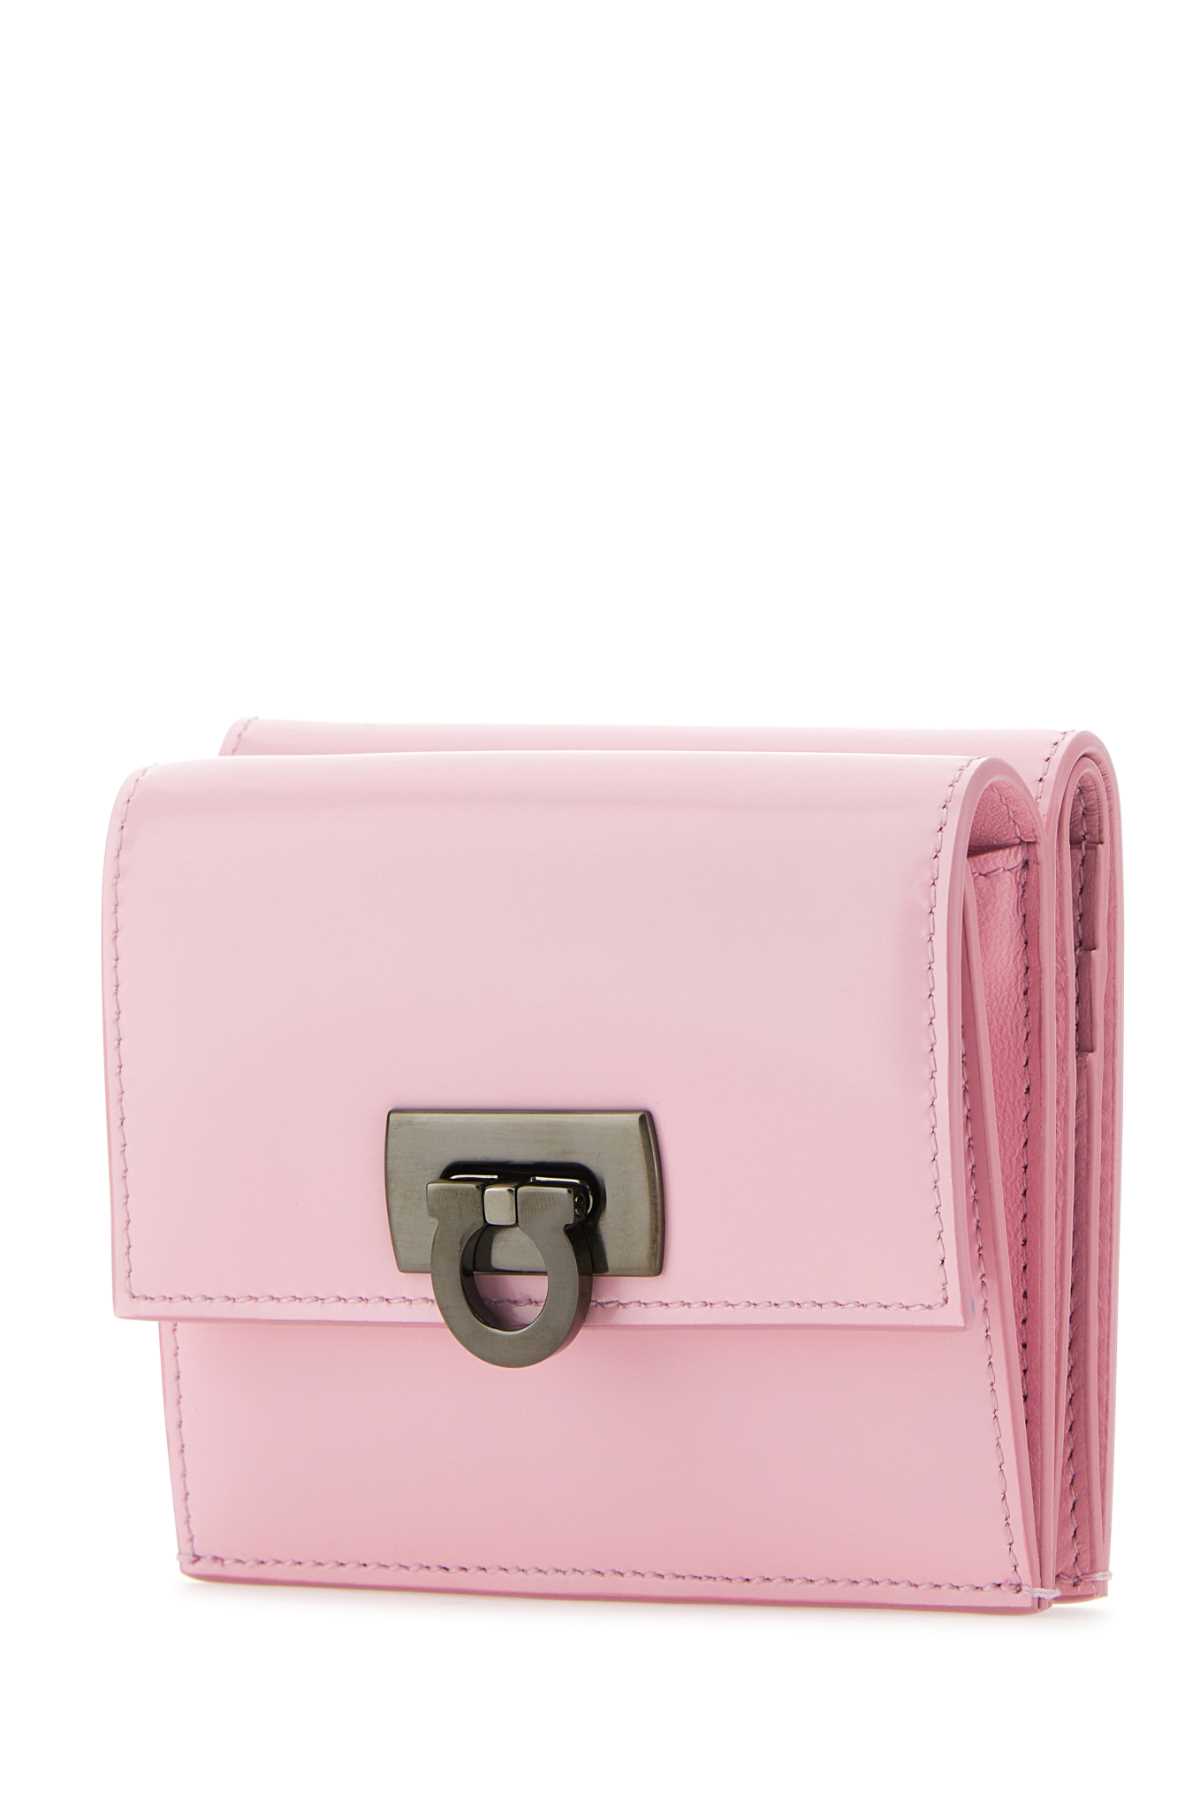 Ferragamo Pastel Pink Leather Wallet In Bubblegum